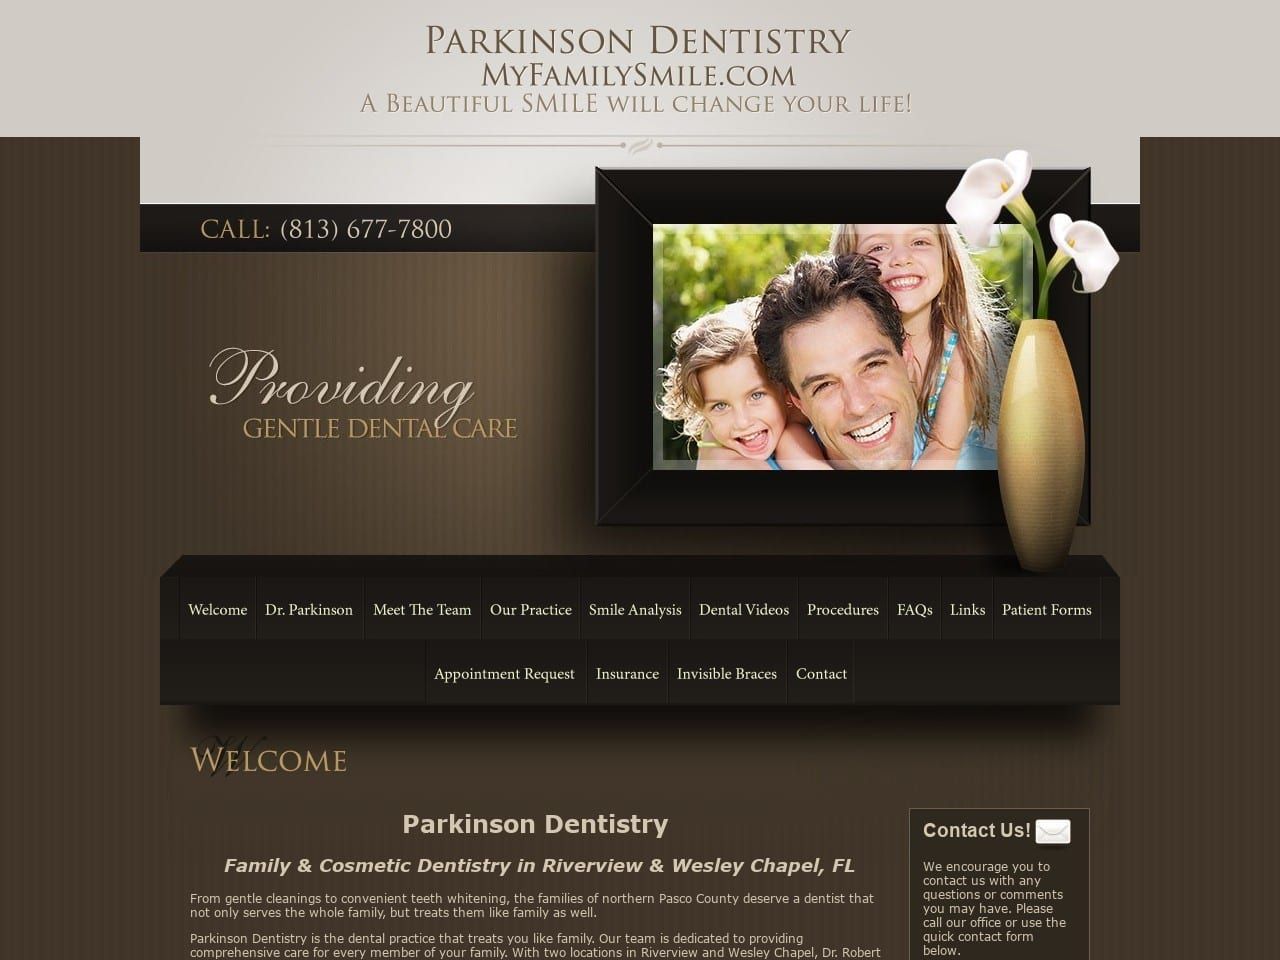 Arnold Dentist Website Screenshot from myfamilysmile.com